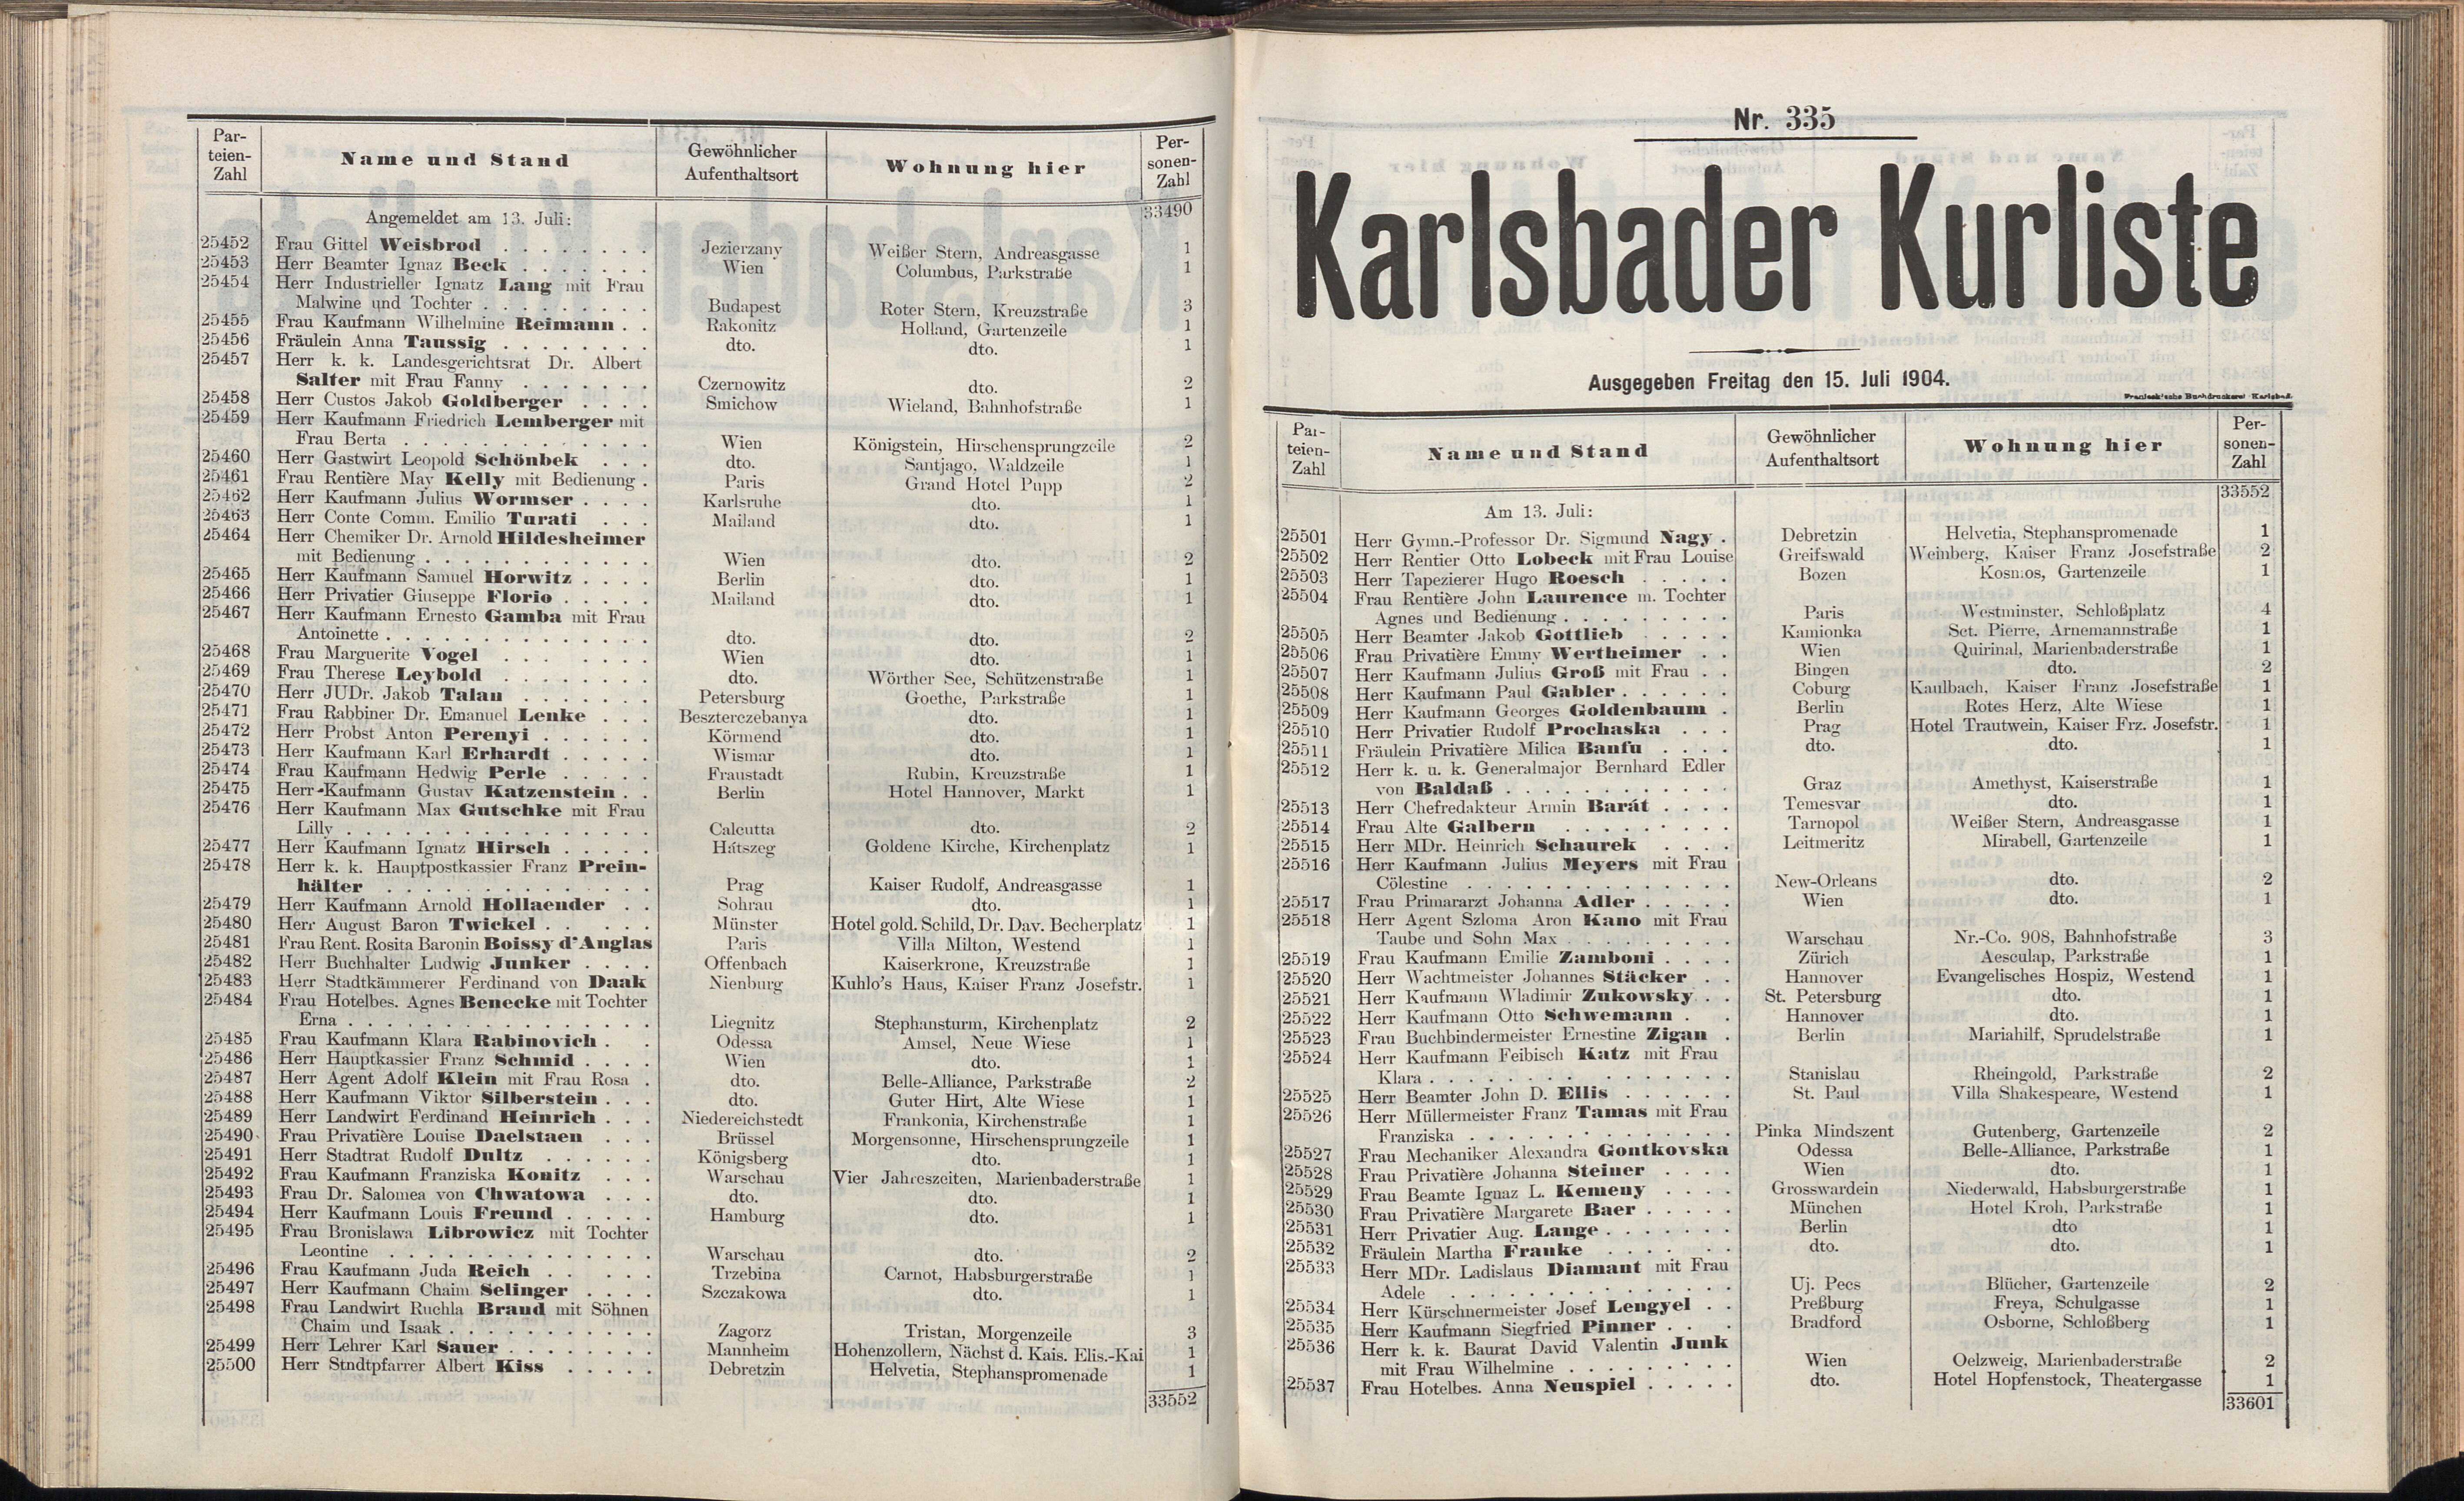 357. soap-kv_knihovna_karlsbader-kurliste-1904_3580